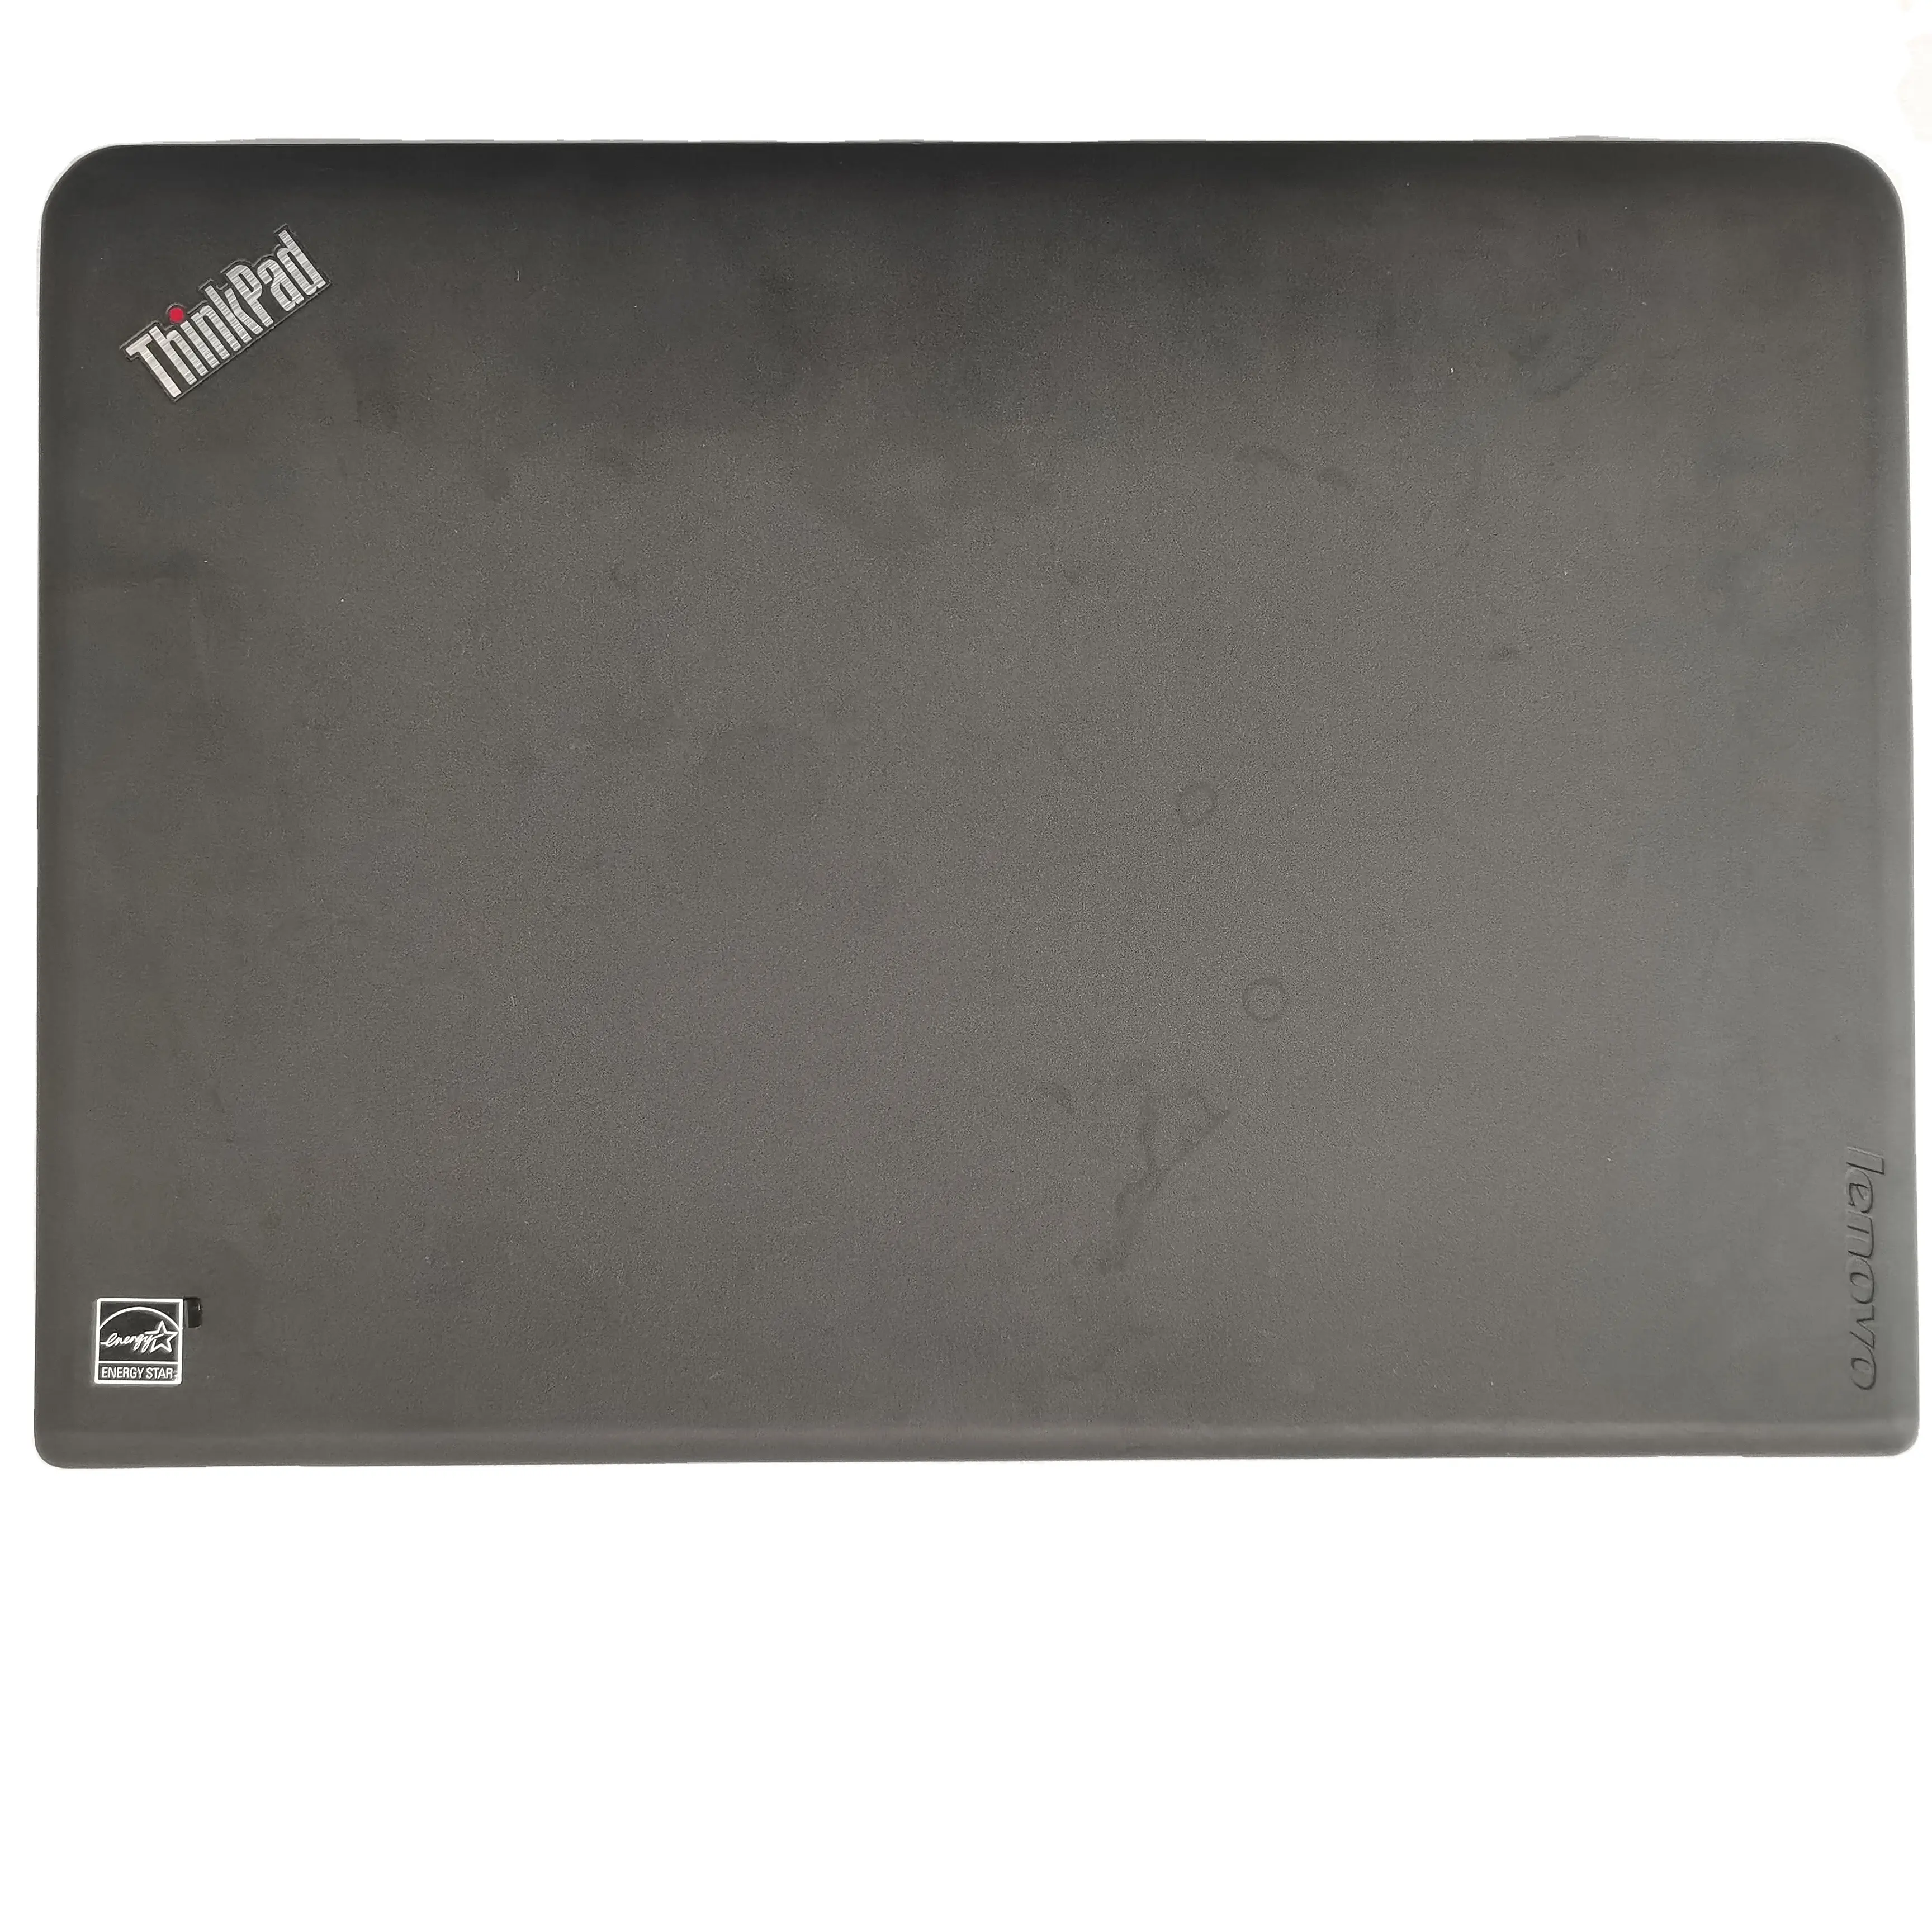 Laptop Computer Business T-hink pad E455 14'' 1920*1080 AMD Radeon R5240M Win8.1 64bit DirectX12